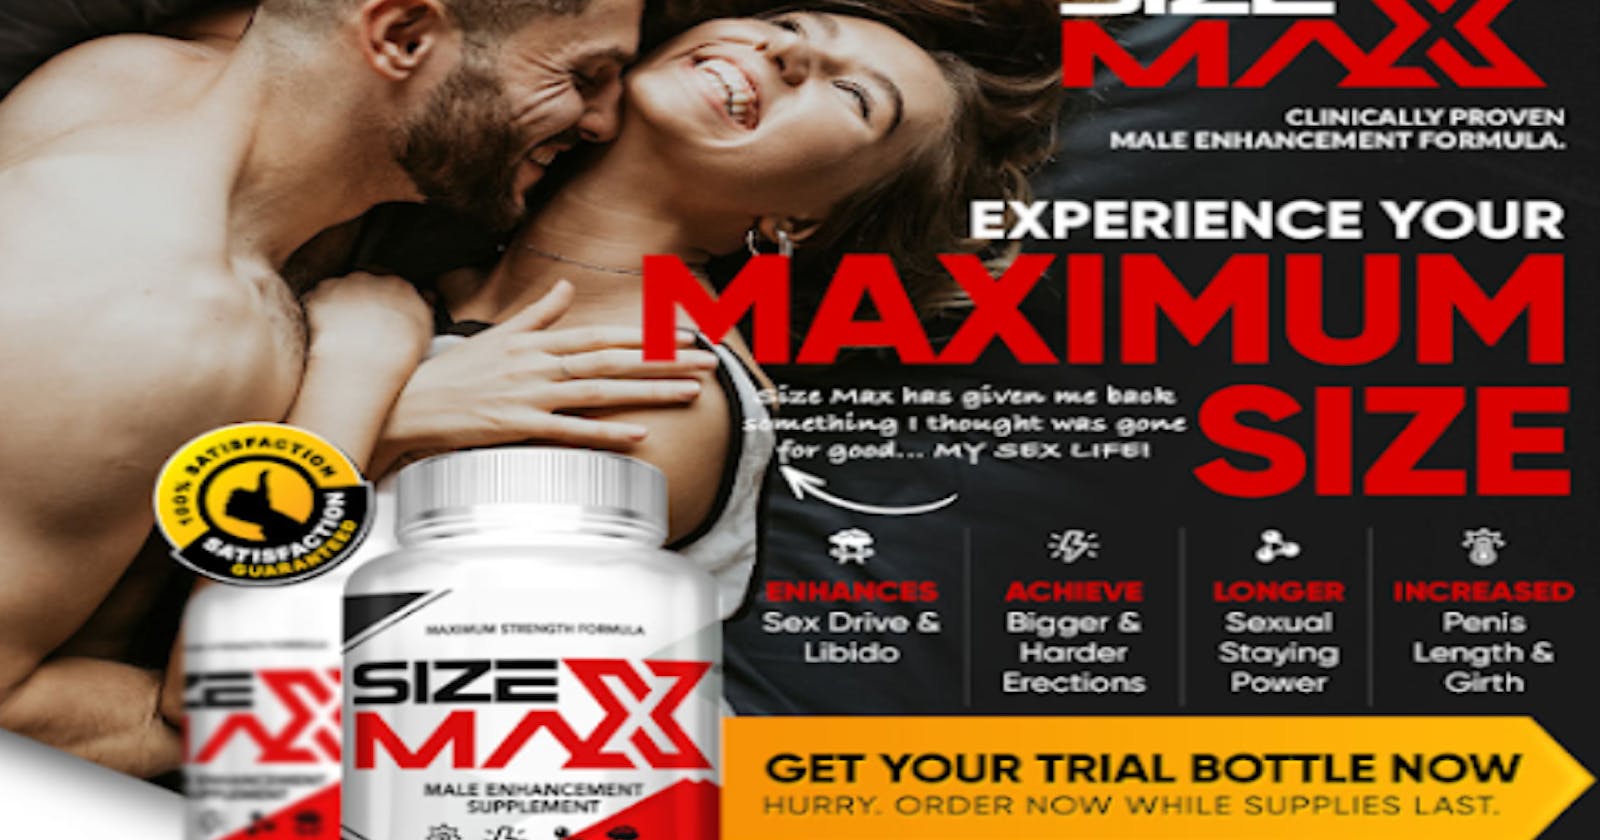 Max Size Male Enhancement USA Reviews?